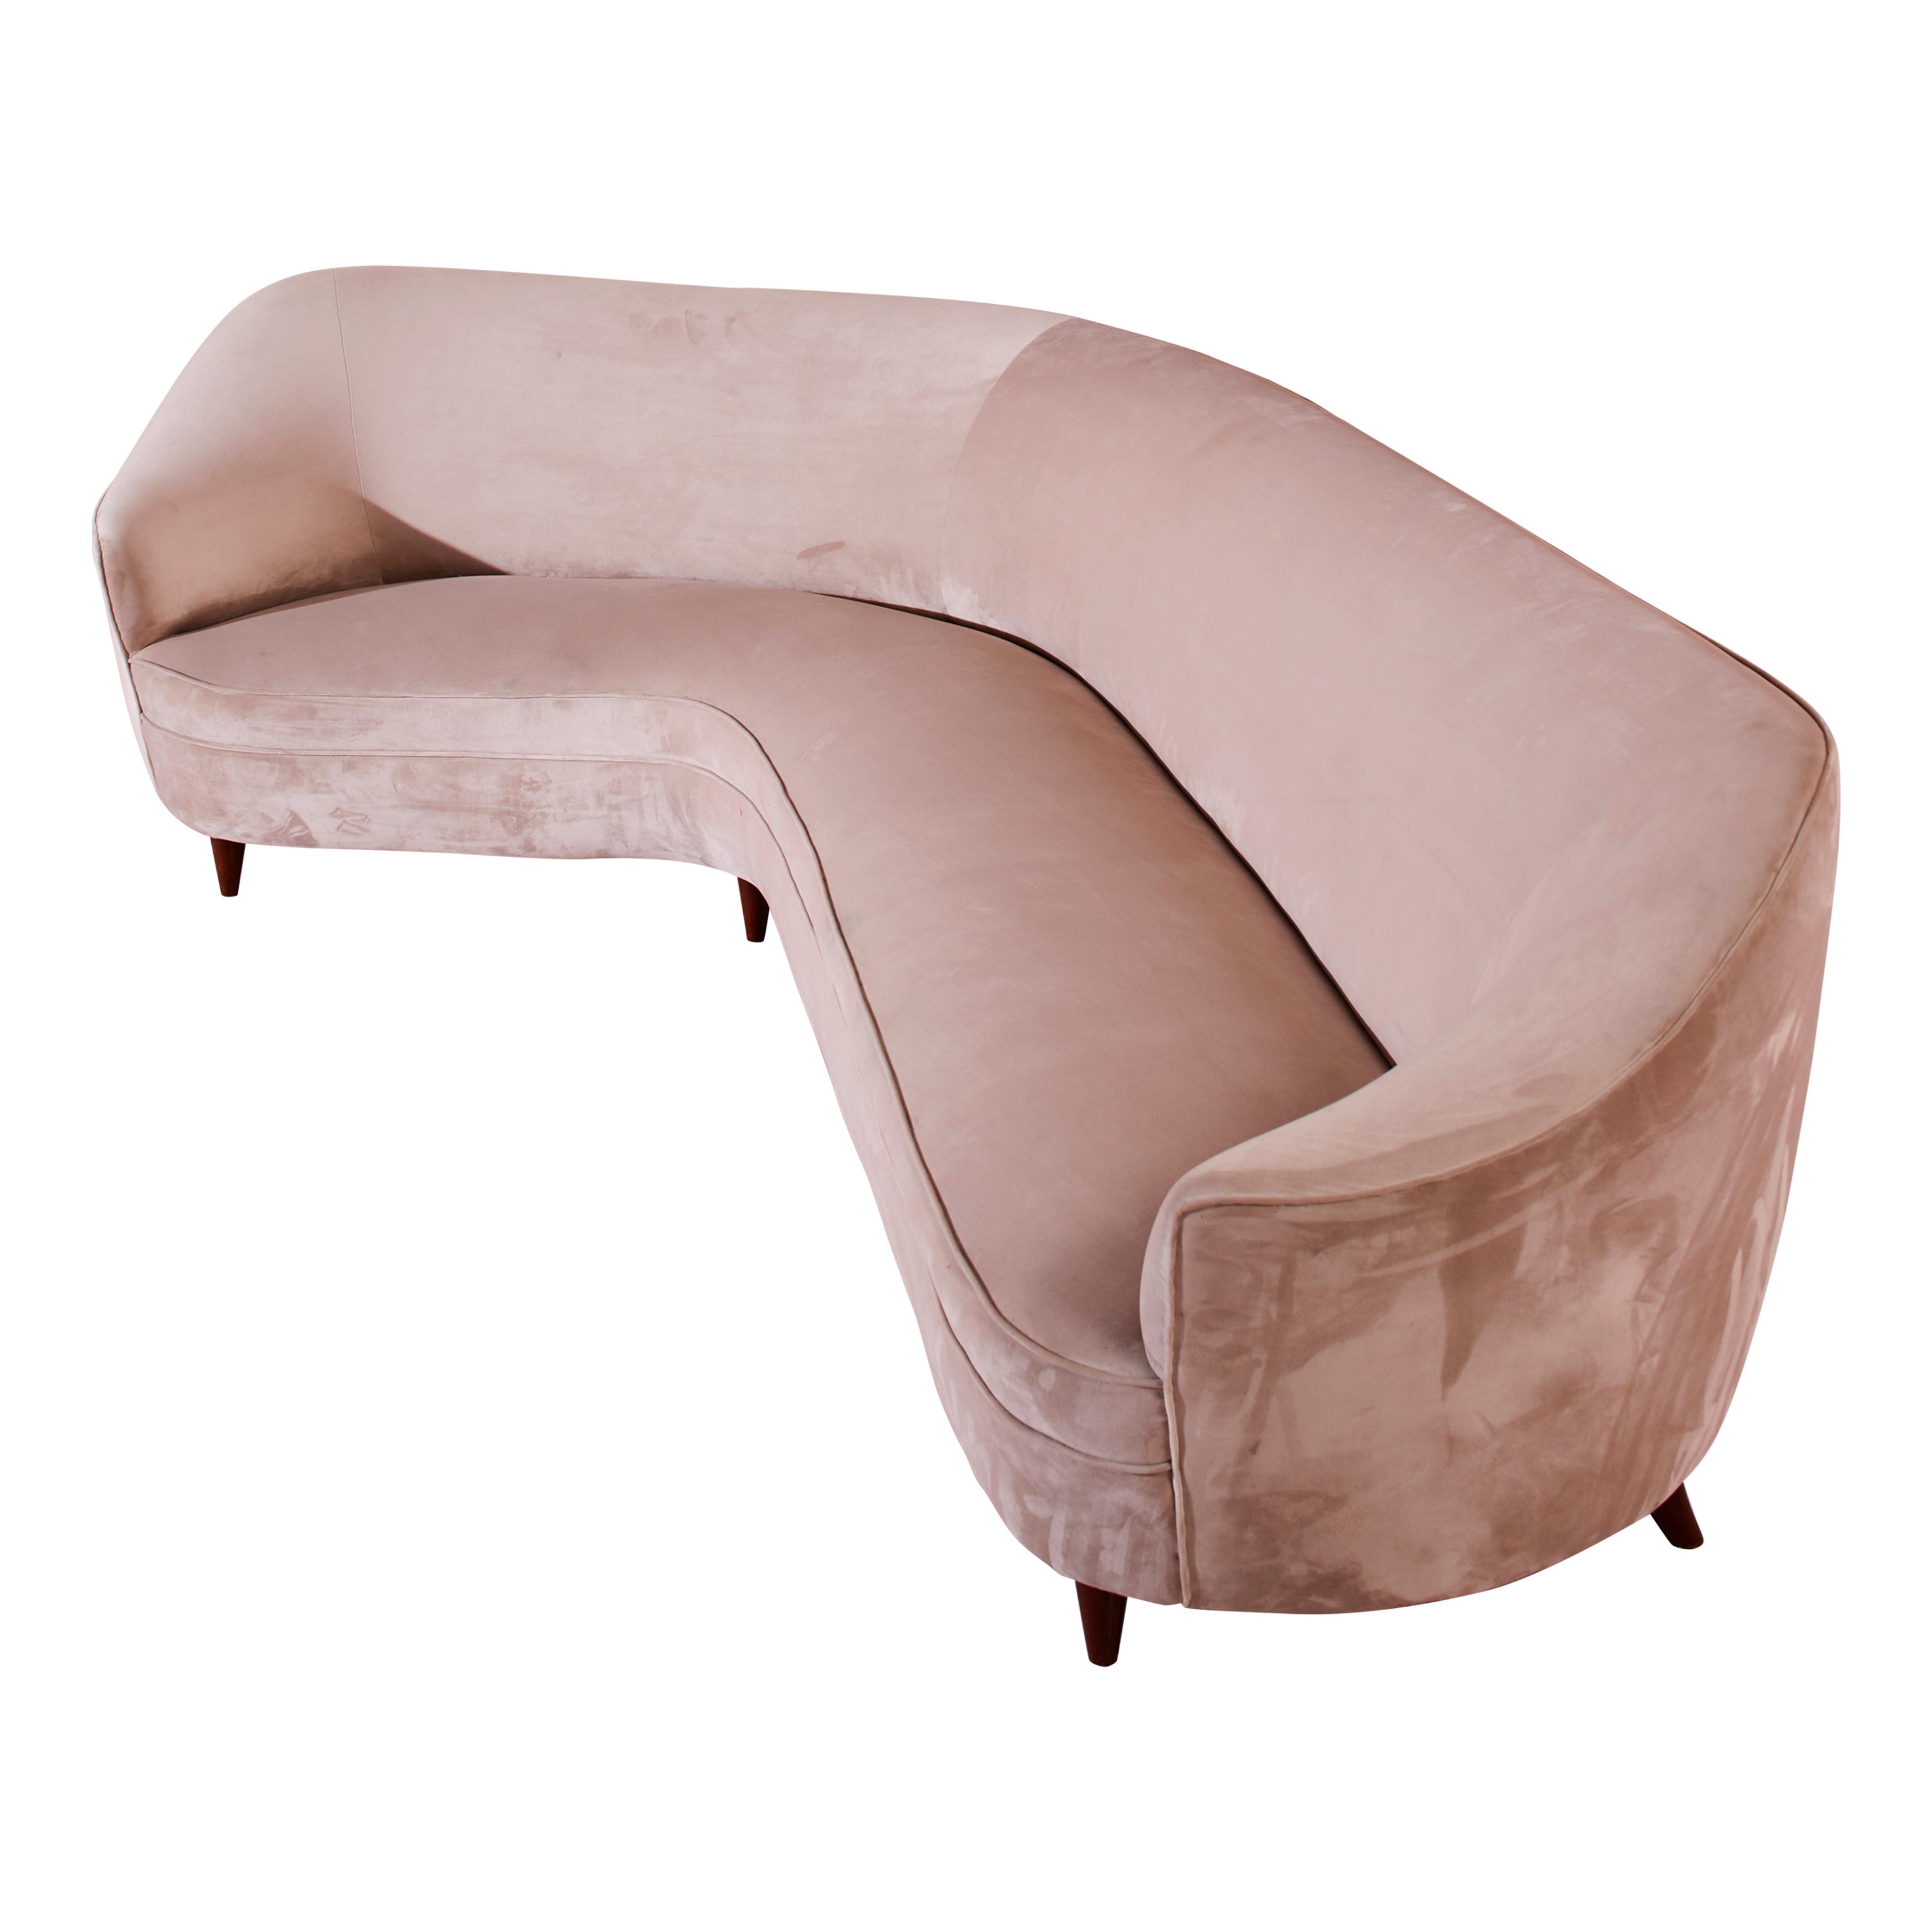 Gio Ponti curved sofa by Casa e Giardino, Italy, 1940s For Sale